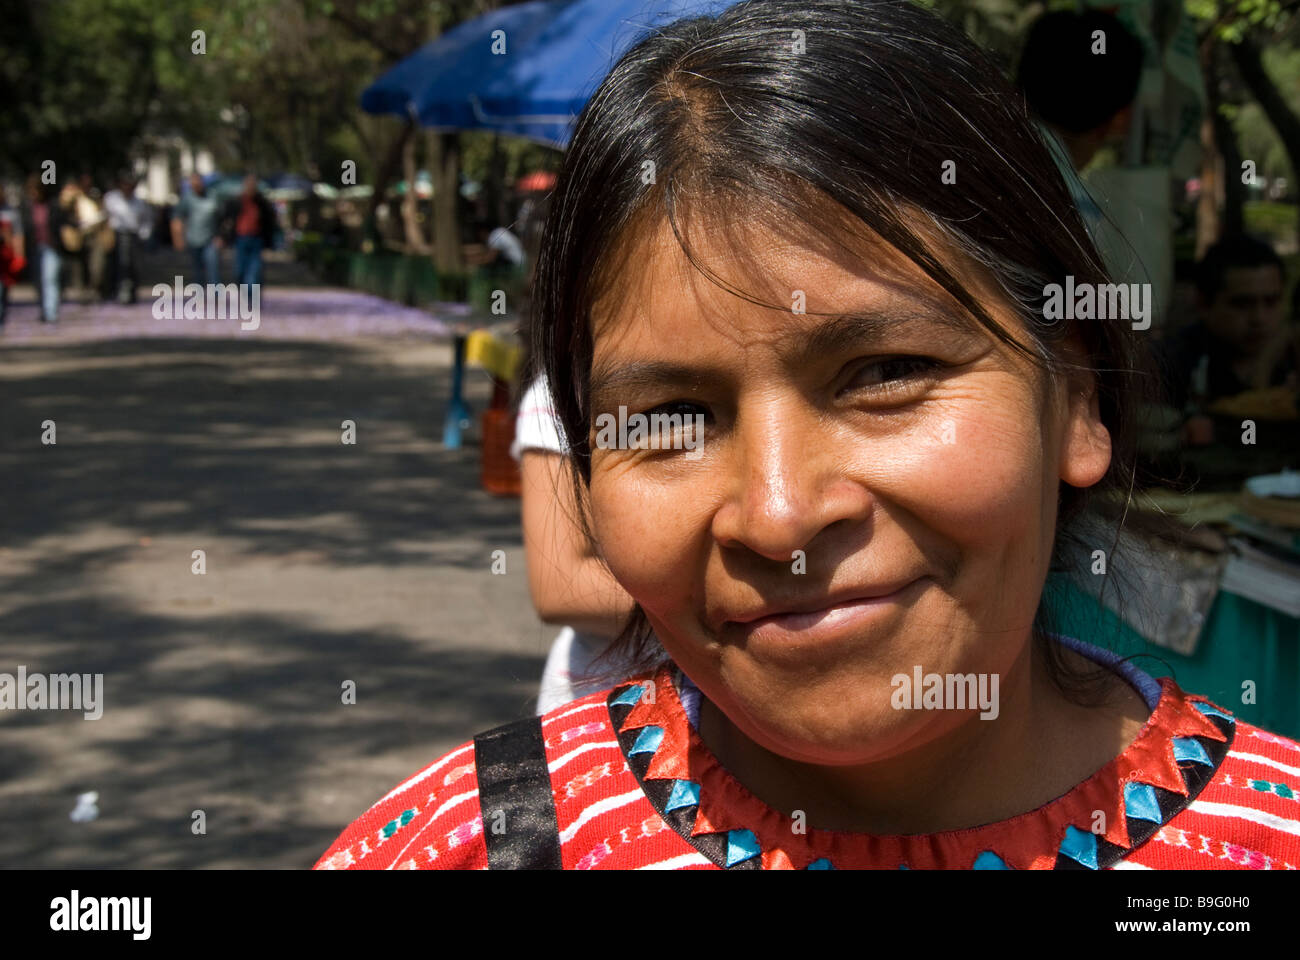 a mexican woman, Mexico city Stock Photo